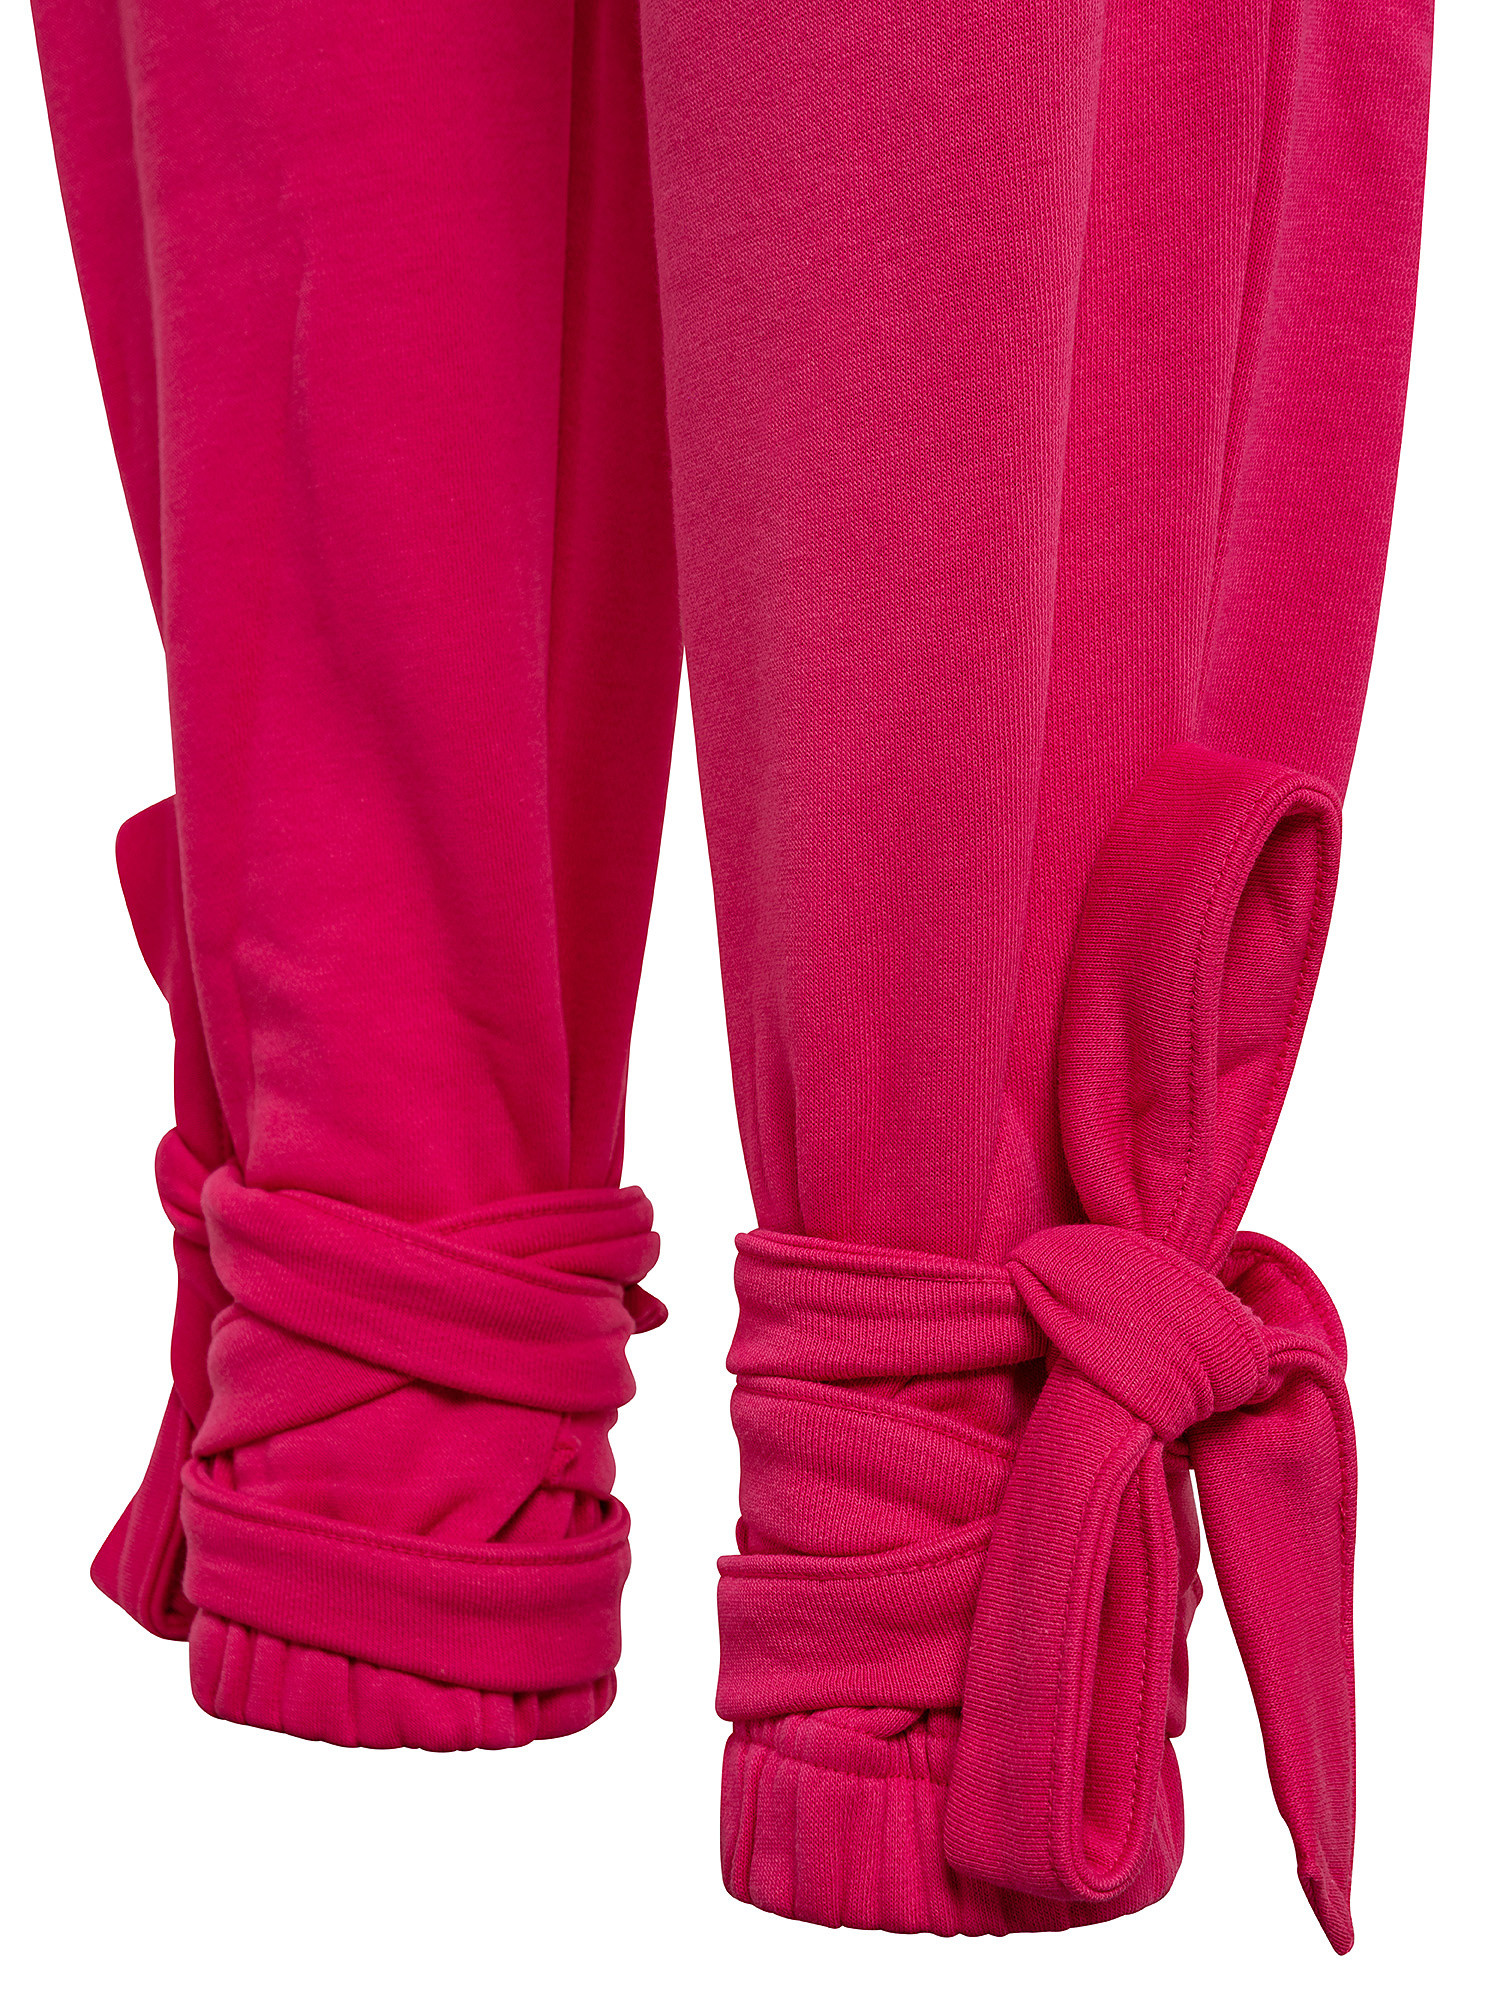 Cardi B Knit Pants, Pink Fuchsia, large image number 2